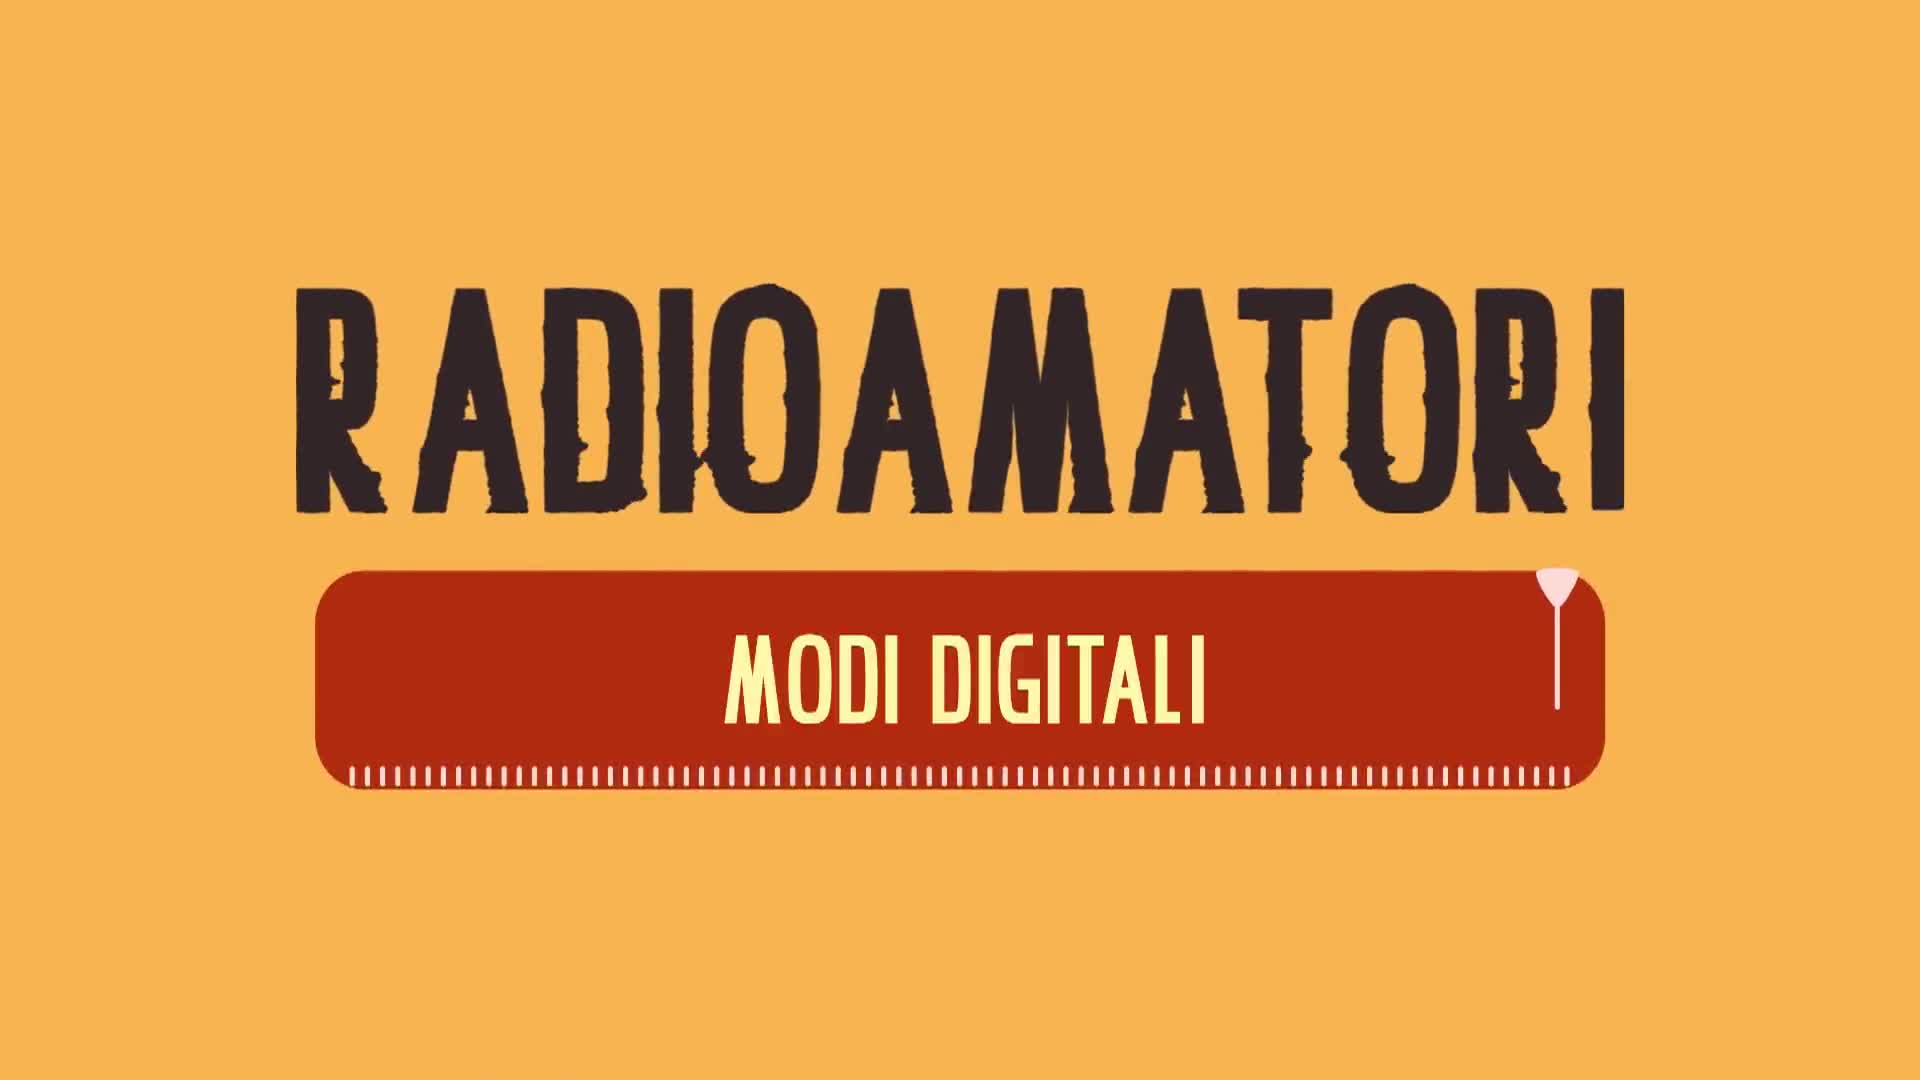 Radioamatori | Modi digitali - immagine